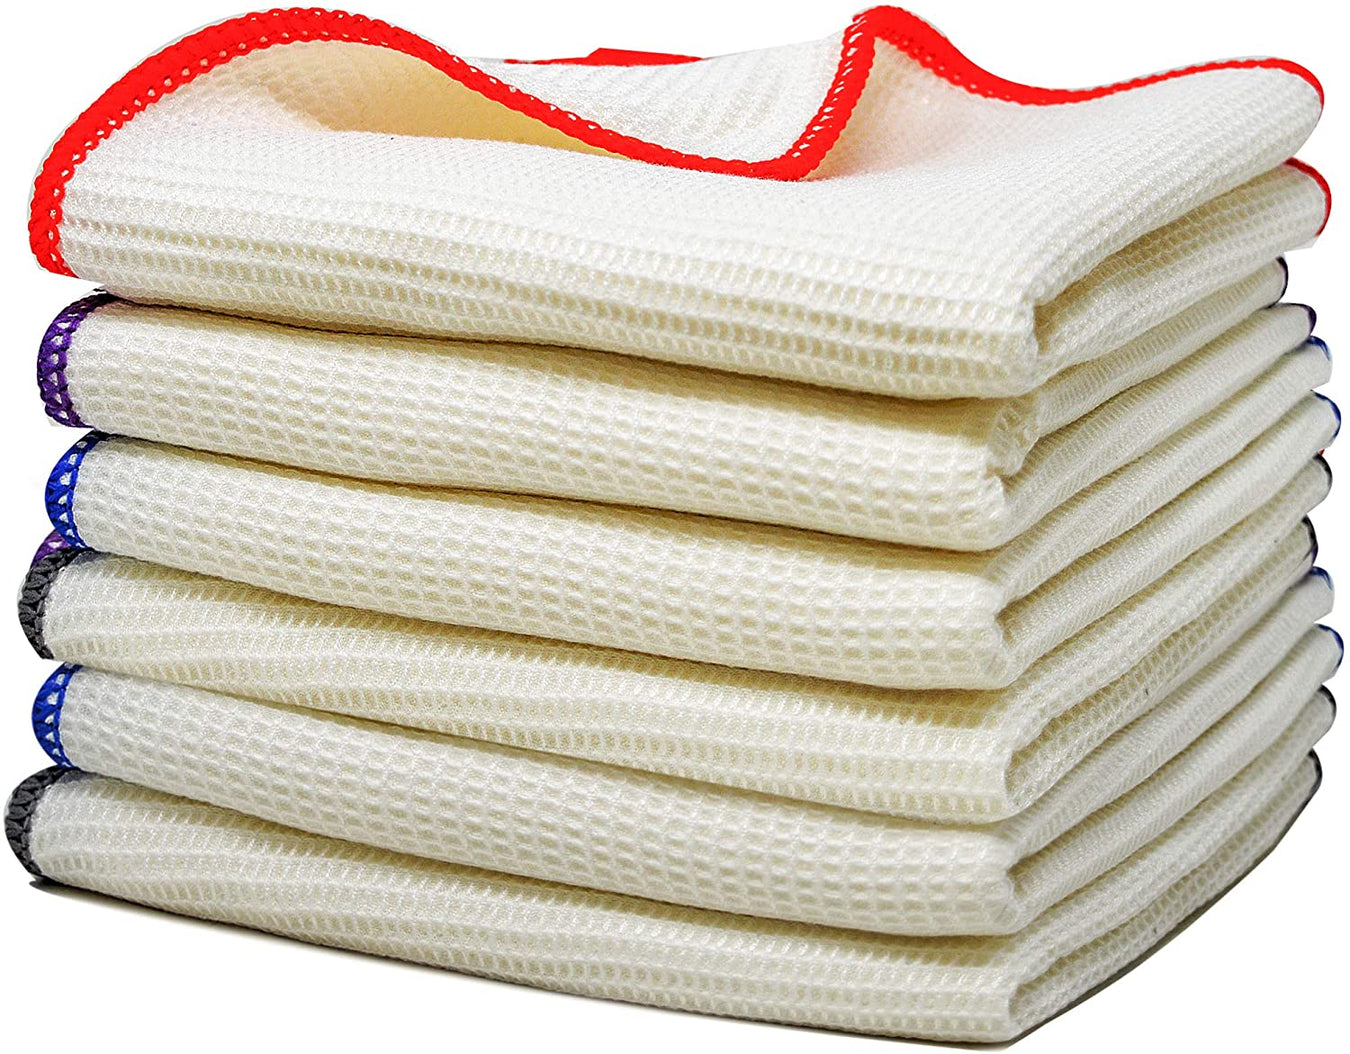 Assorted Kitchen Towels